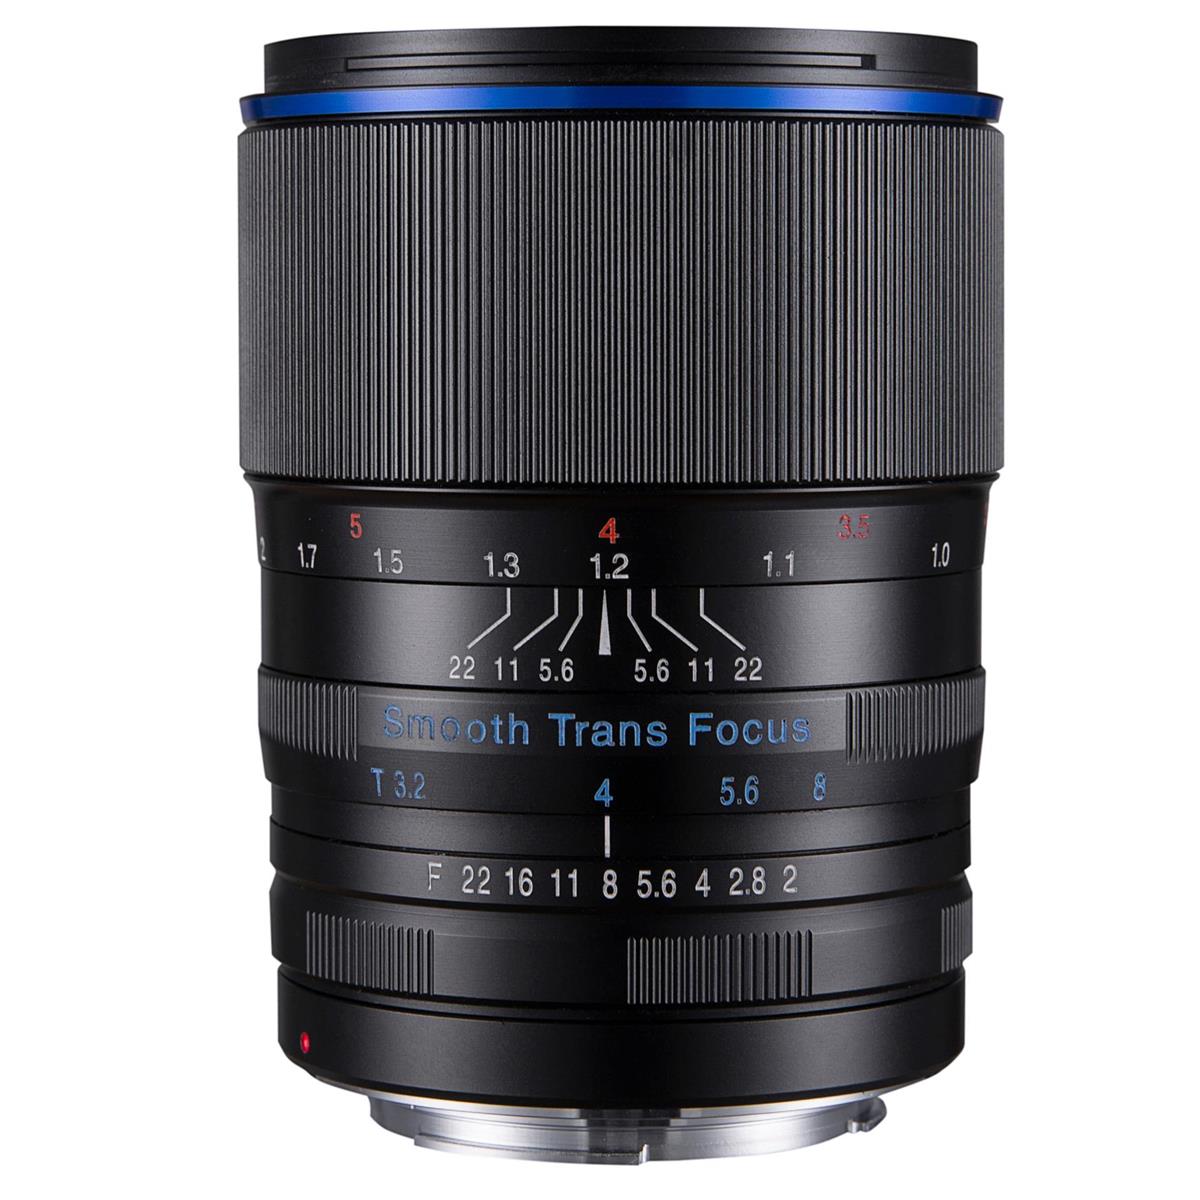 Venus Laowa 105mm f/2 Smooth Trans Focus Lens for Sony E